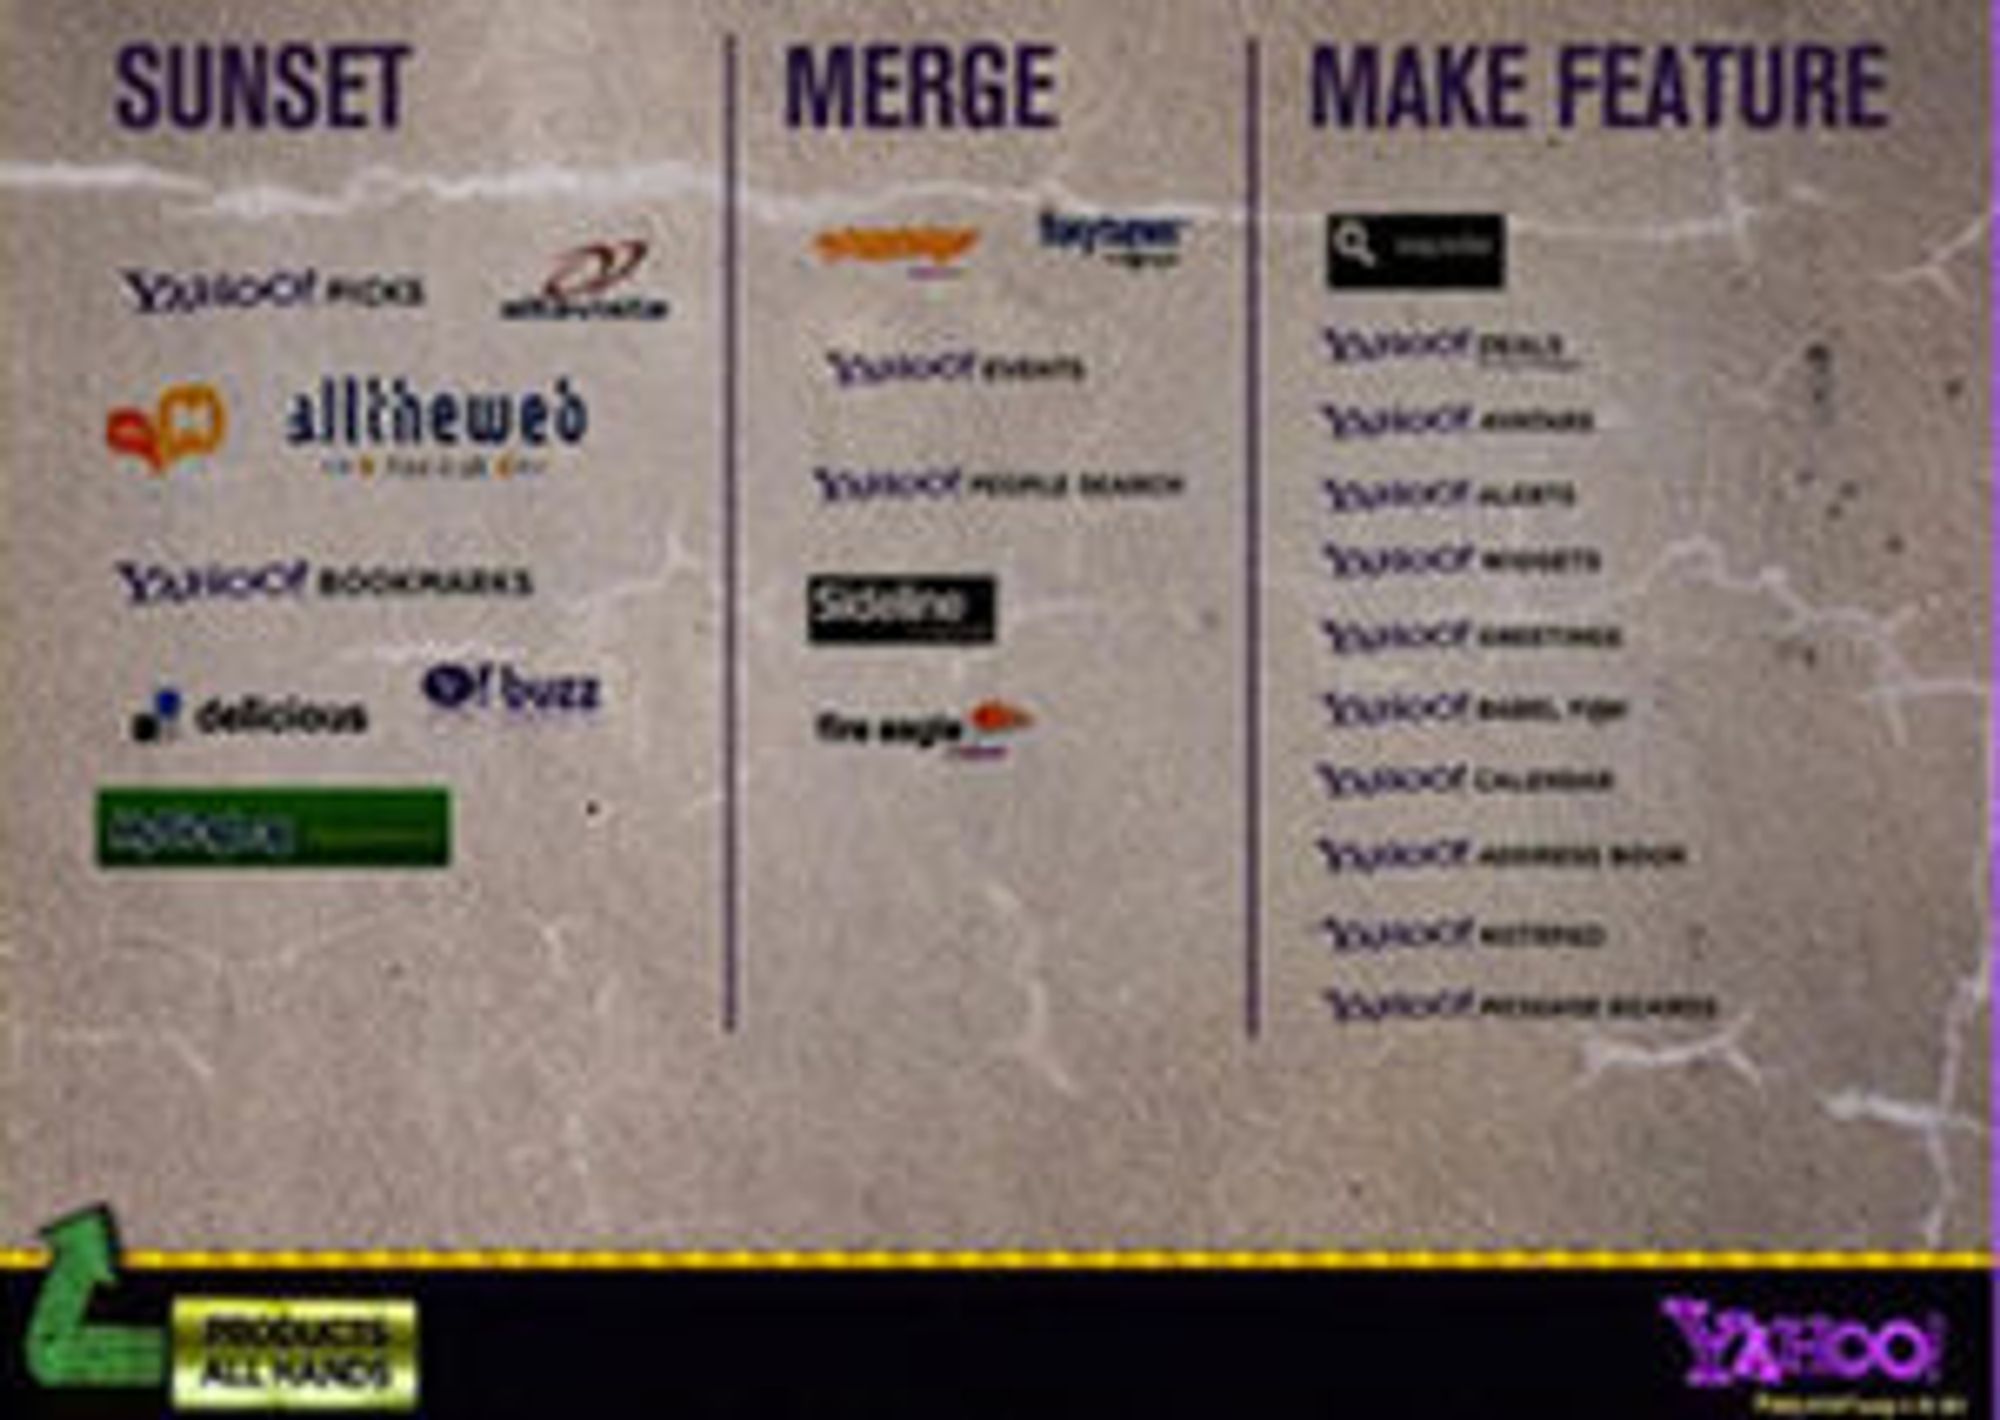 Lekkede kuttplaner: Alltheweb, Altavista, Delicious og fem andre Yahoo-tjenester legges ned.